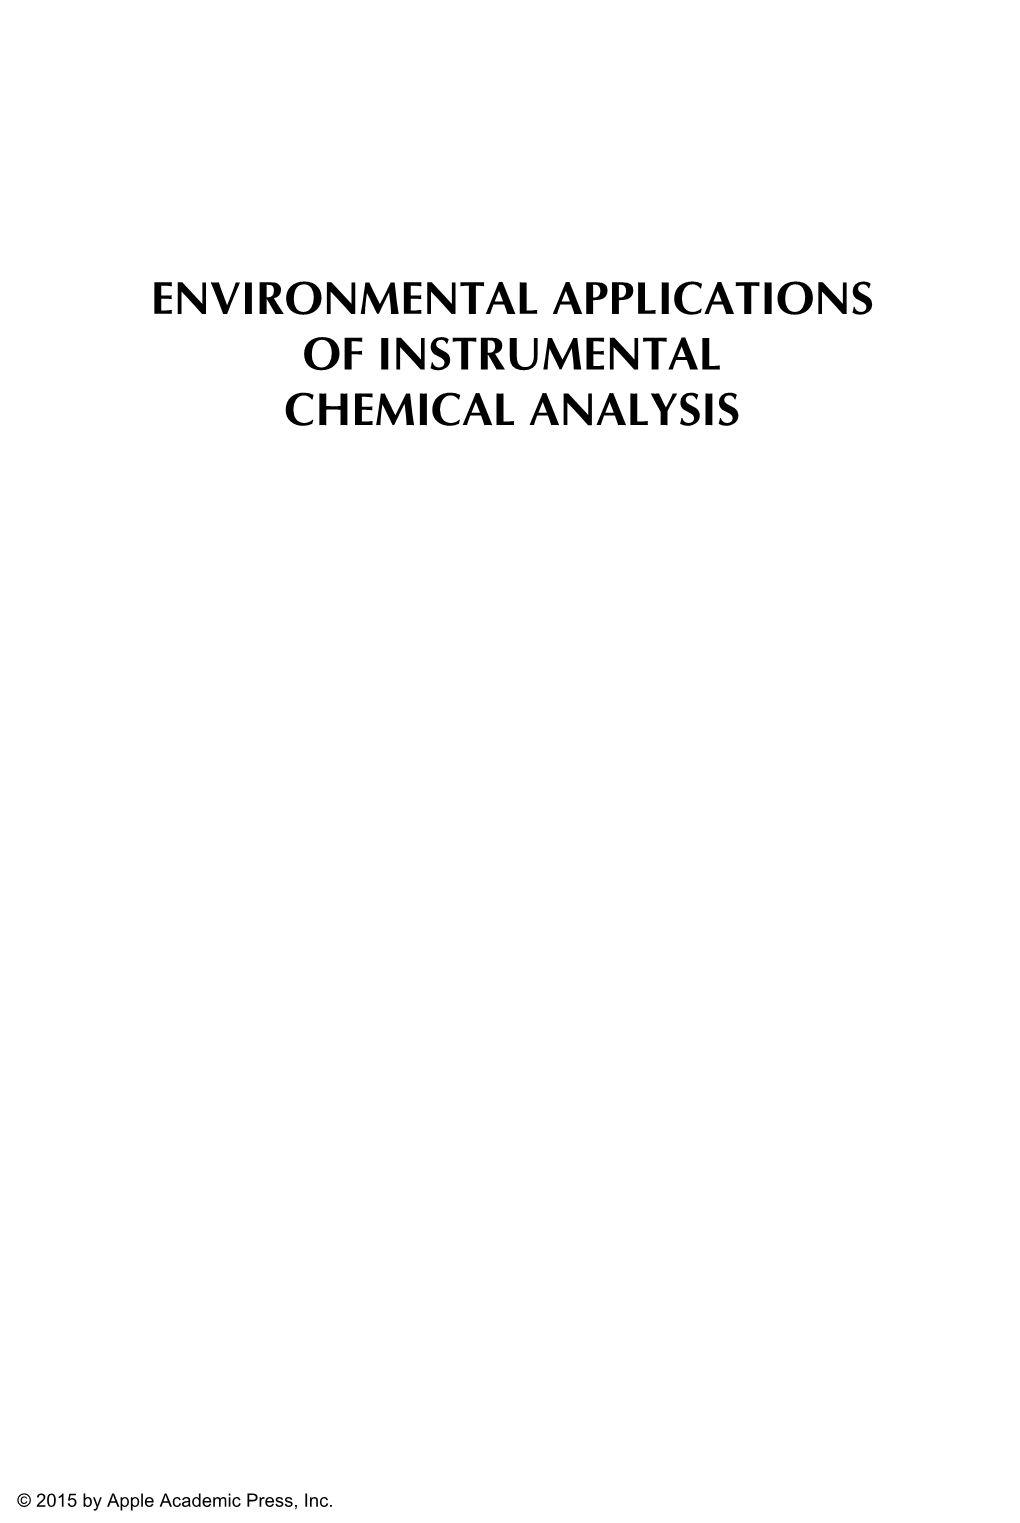 Environmental Applications of Instrumental Chemical Analysis.Pdf